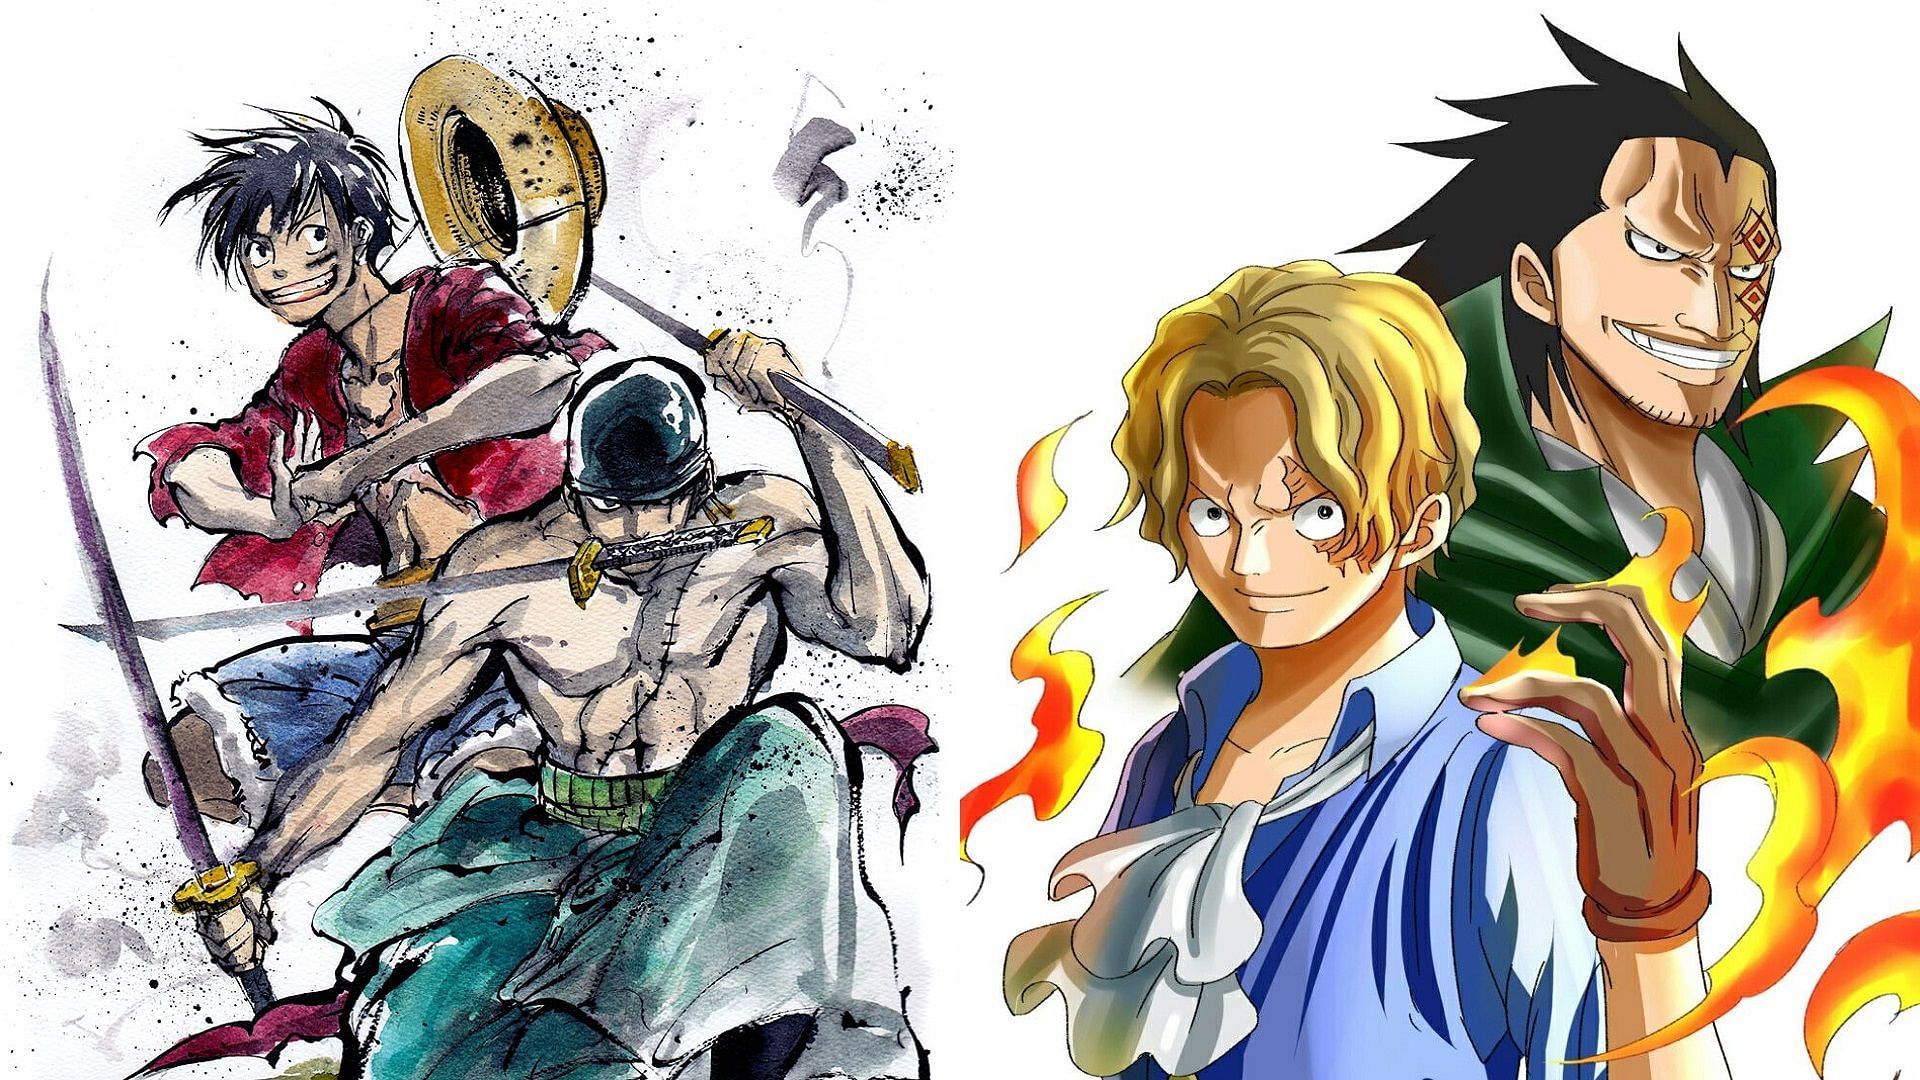 Zoro is Luffy's number two in the Strawhats, while Sabo is Dragon's number two in the Revolutionary Army (Image via Eiichiro Oda/Shueisha, One Piece)